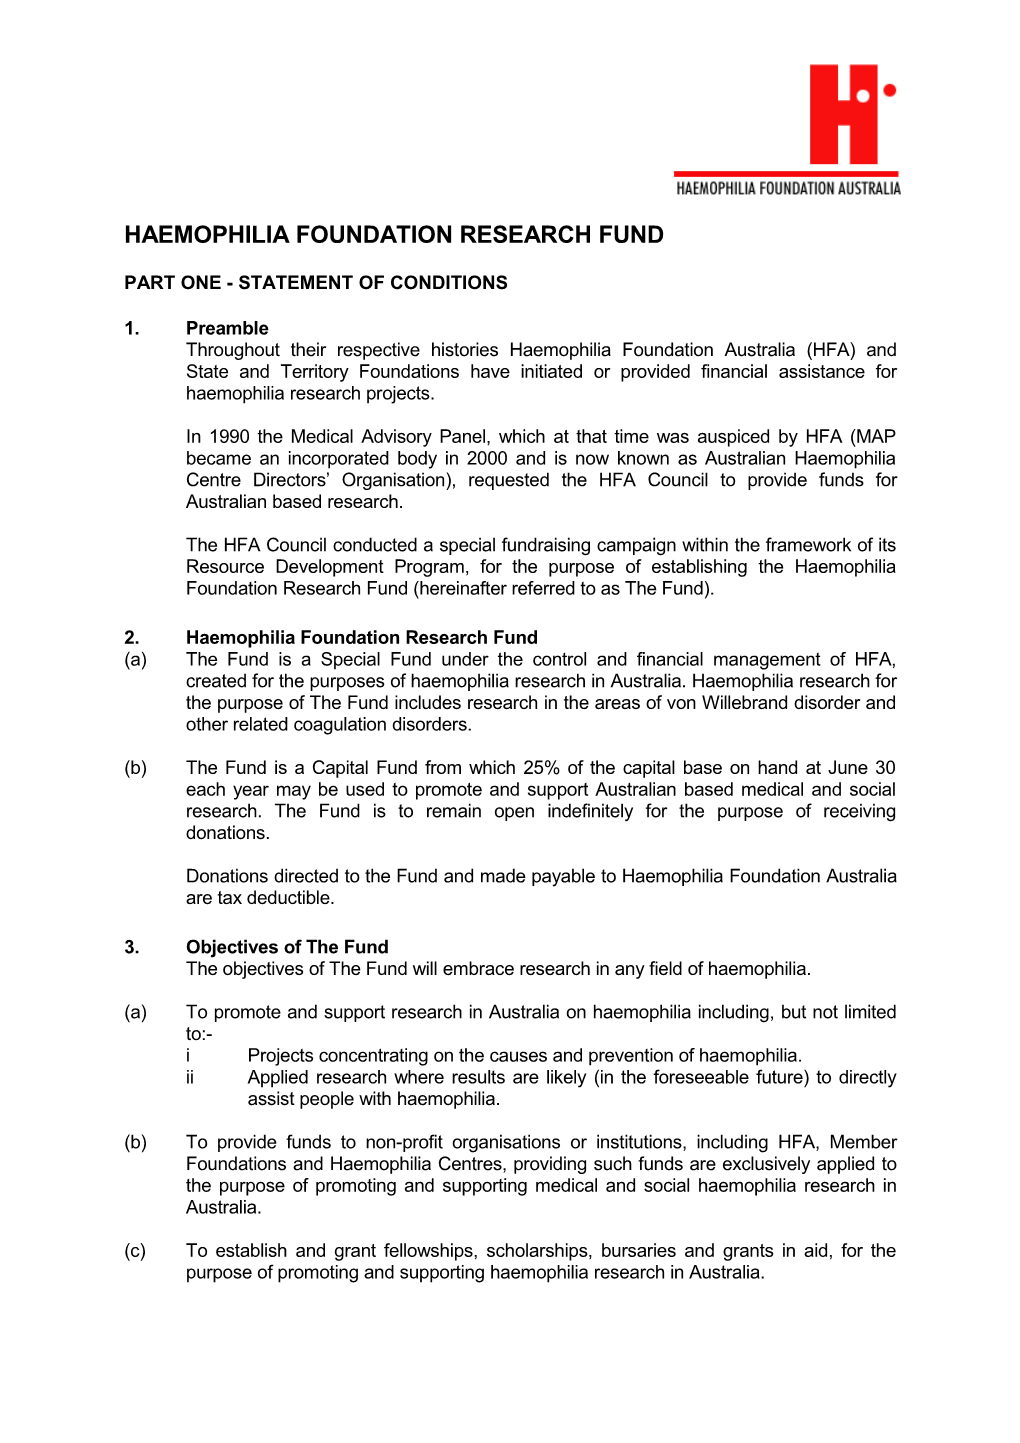 Haemophilia Foundation Research Fund